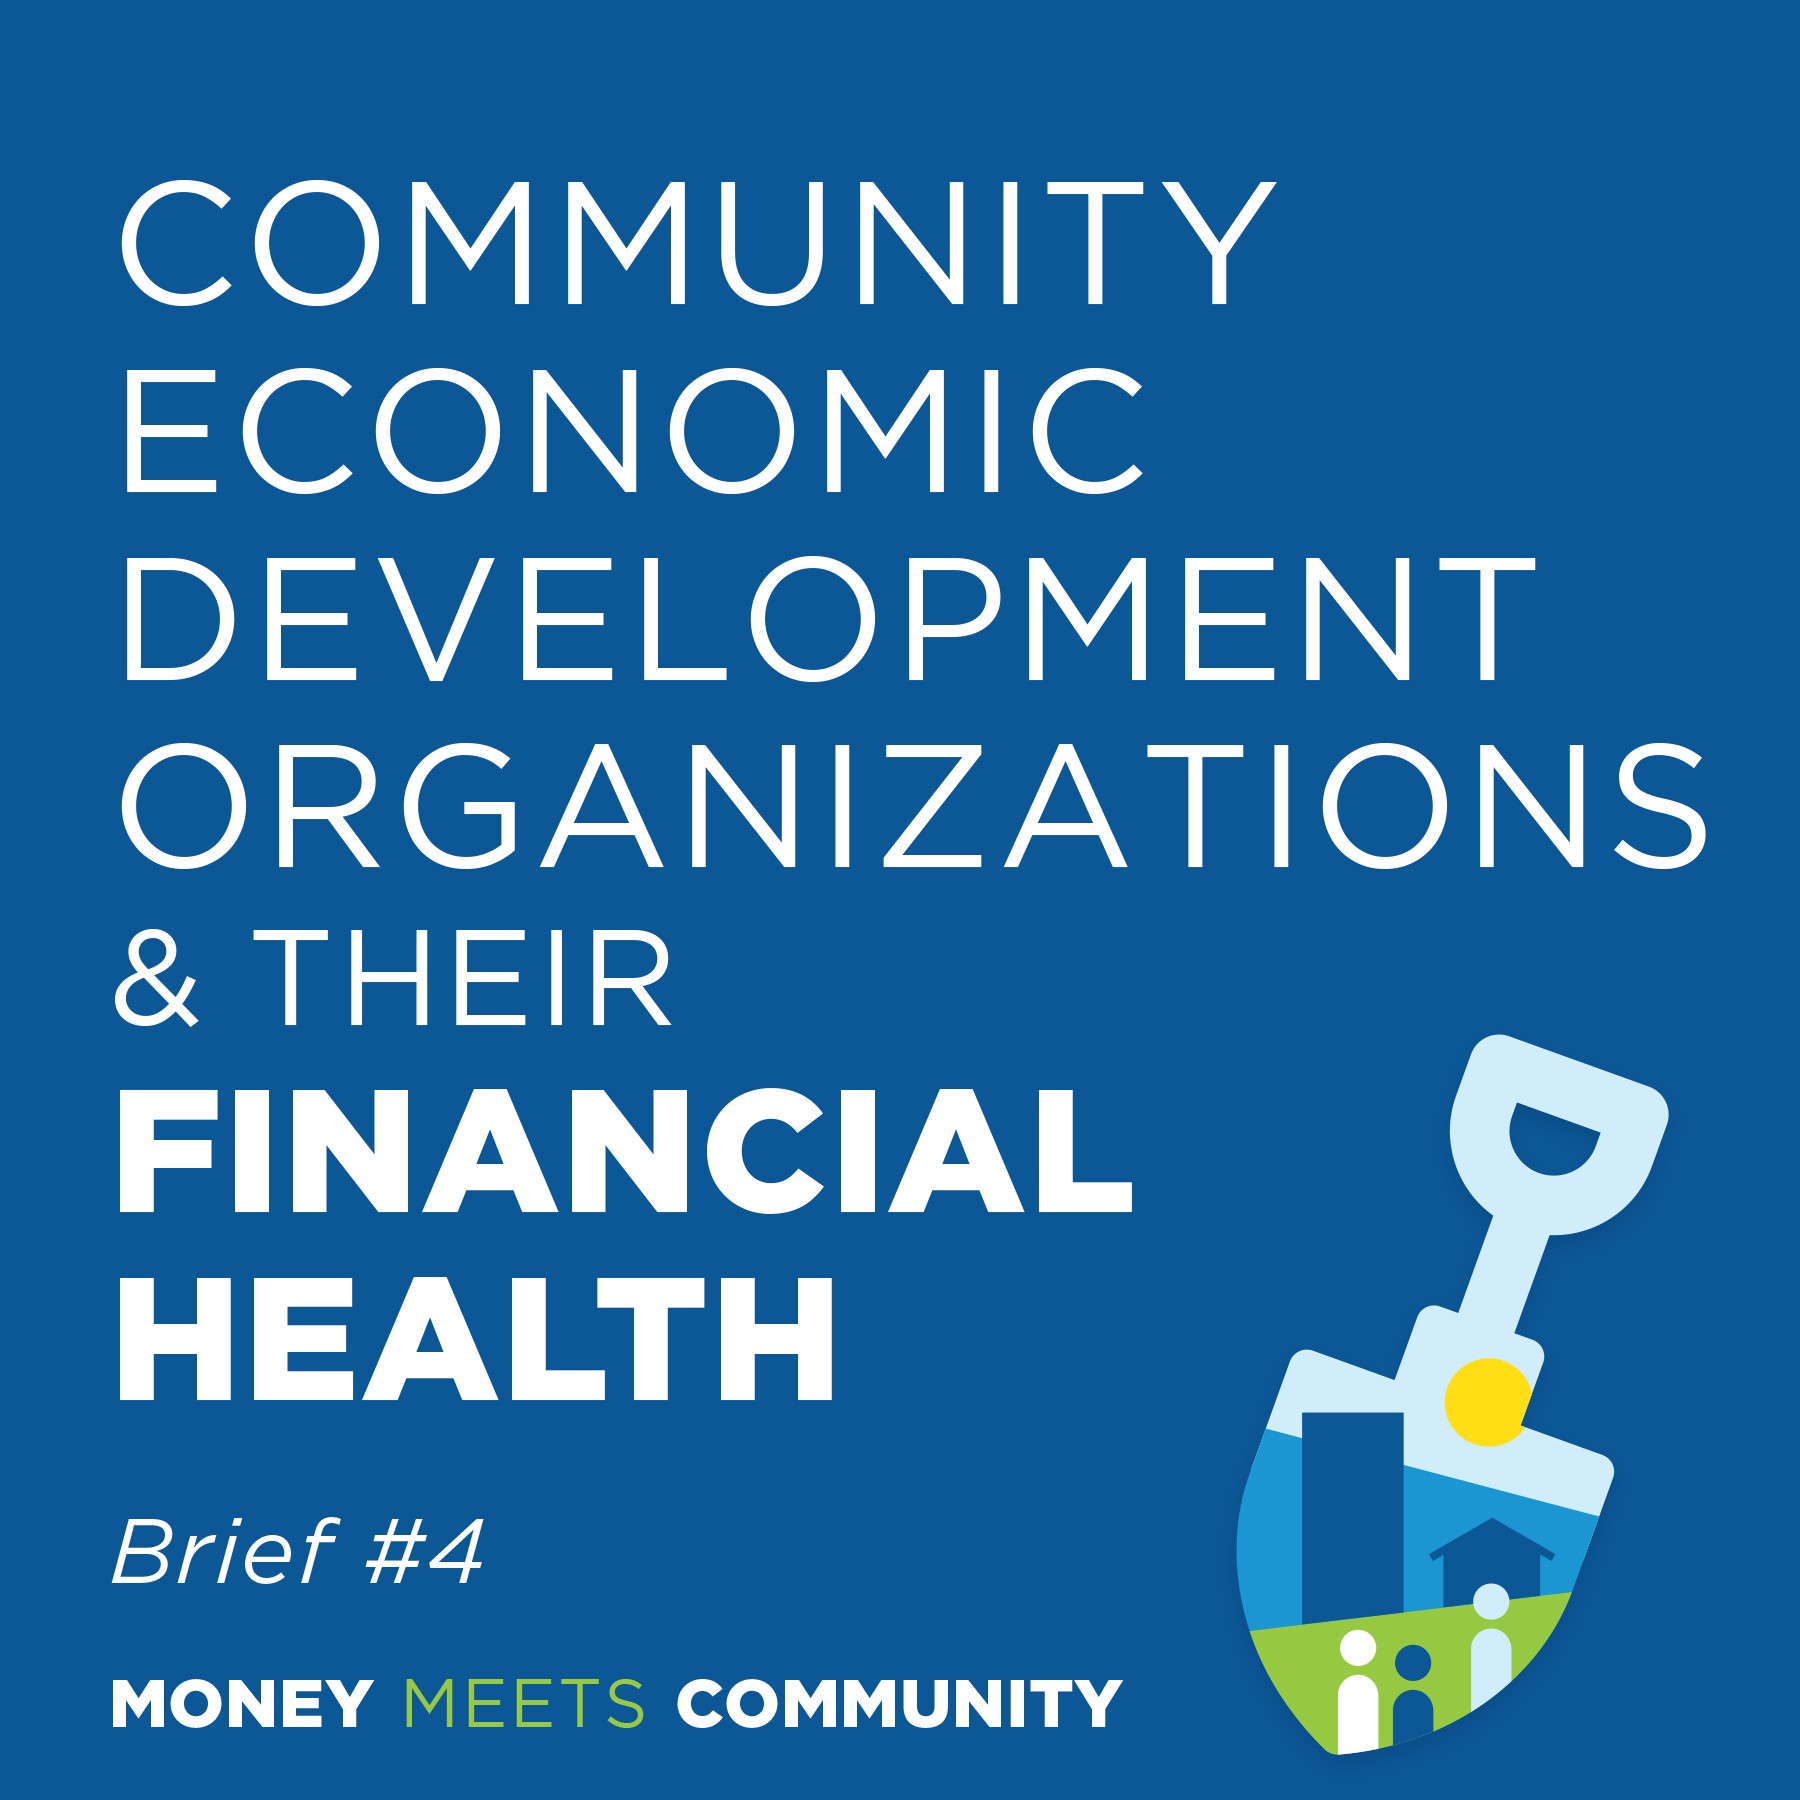 Report: Community Economic Development Organizations & Their Financial Health